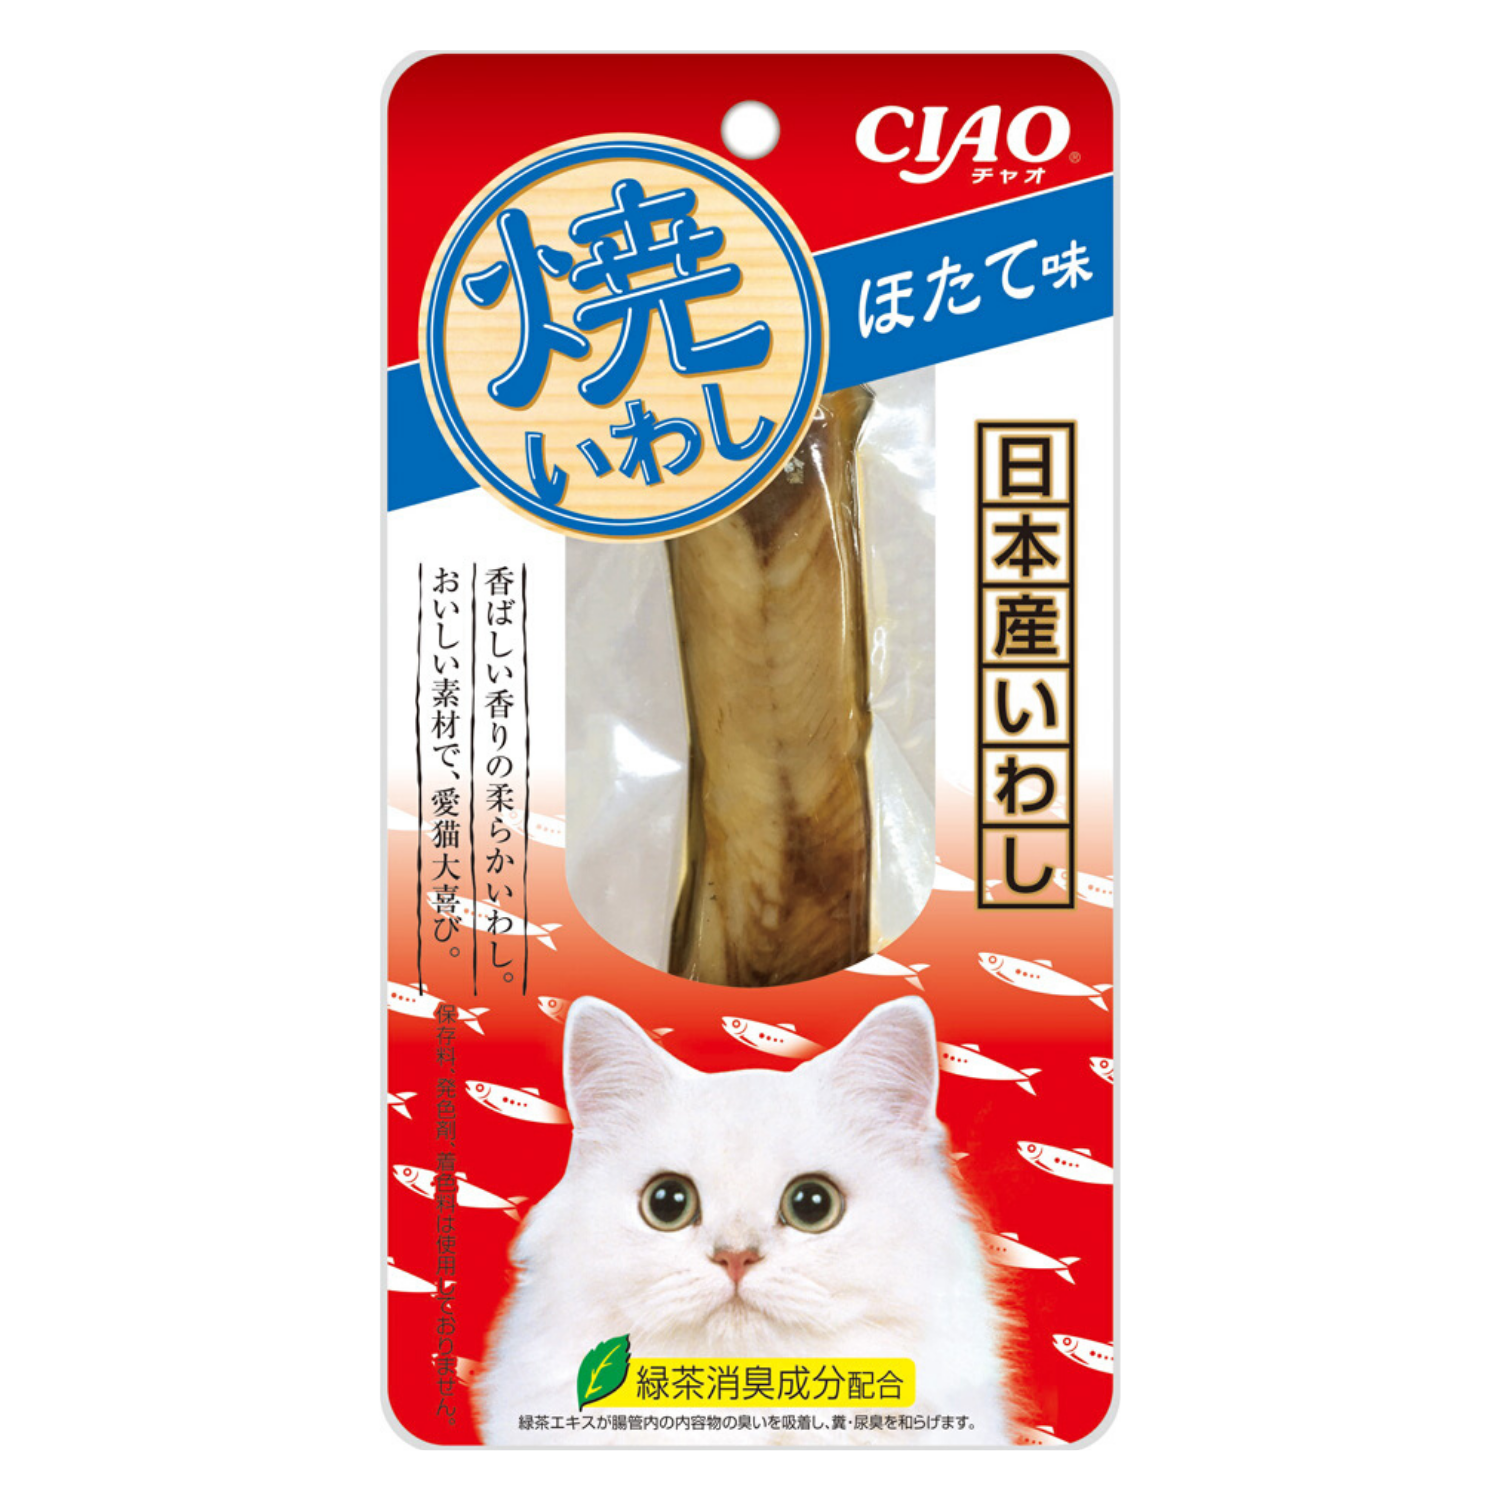 Ciao Iwashi Fillet Scallop Flavor - 20g